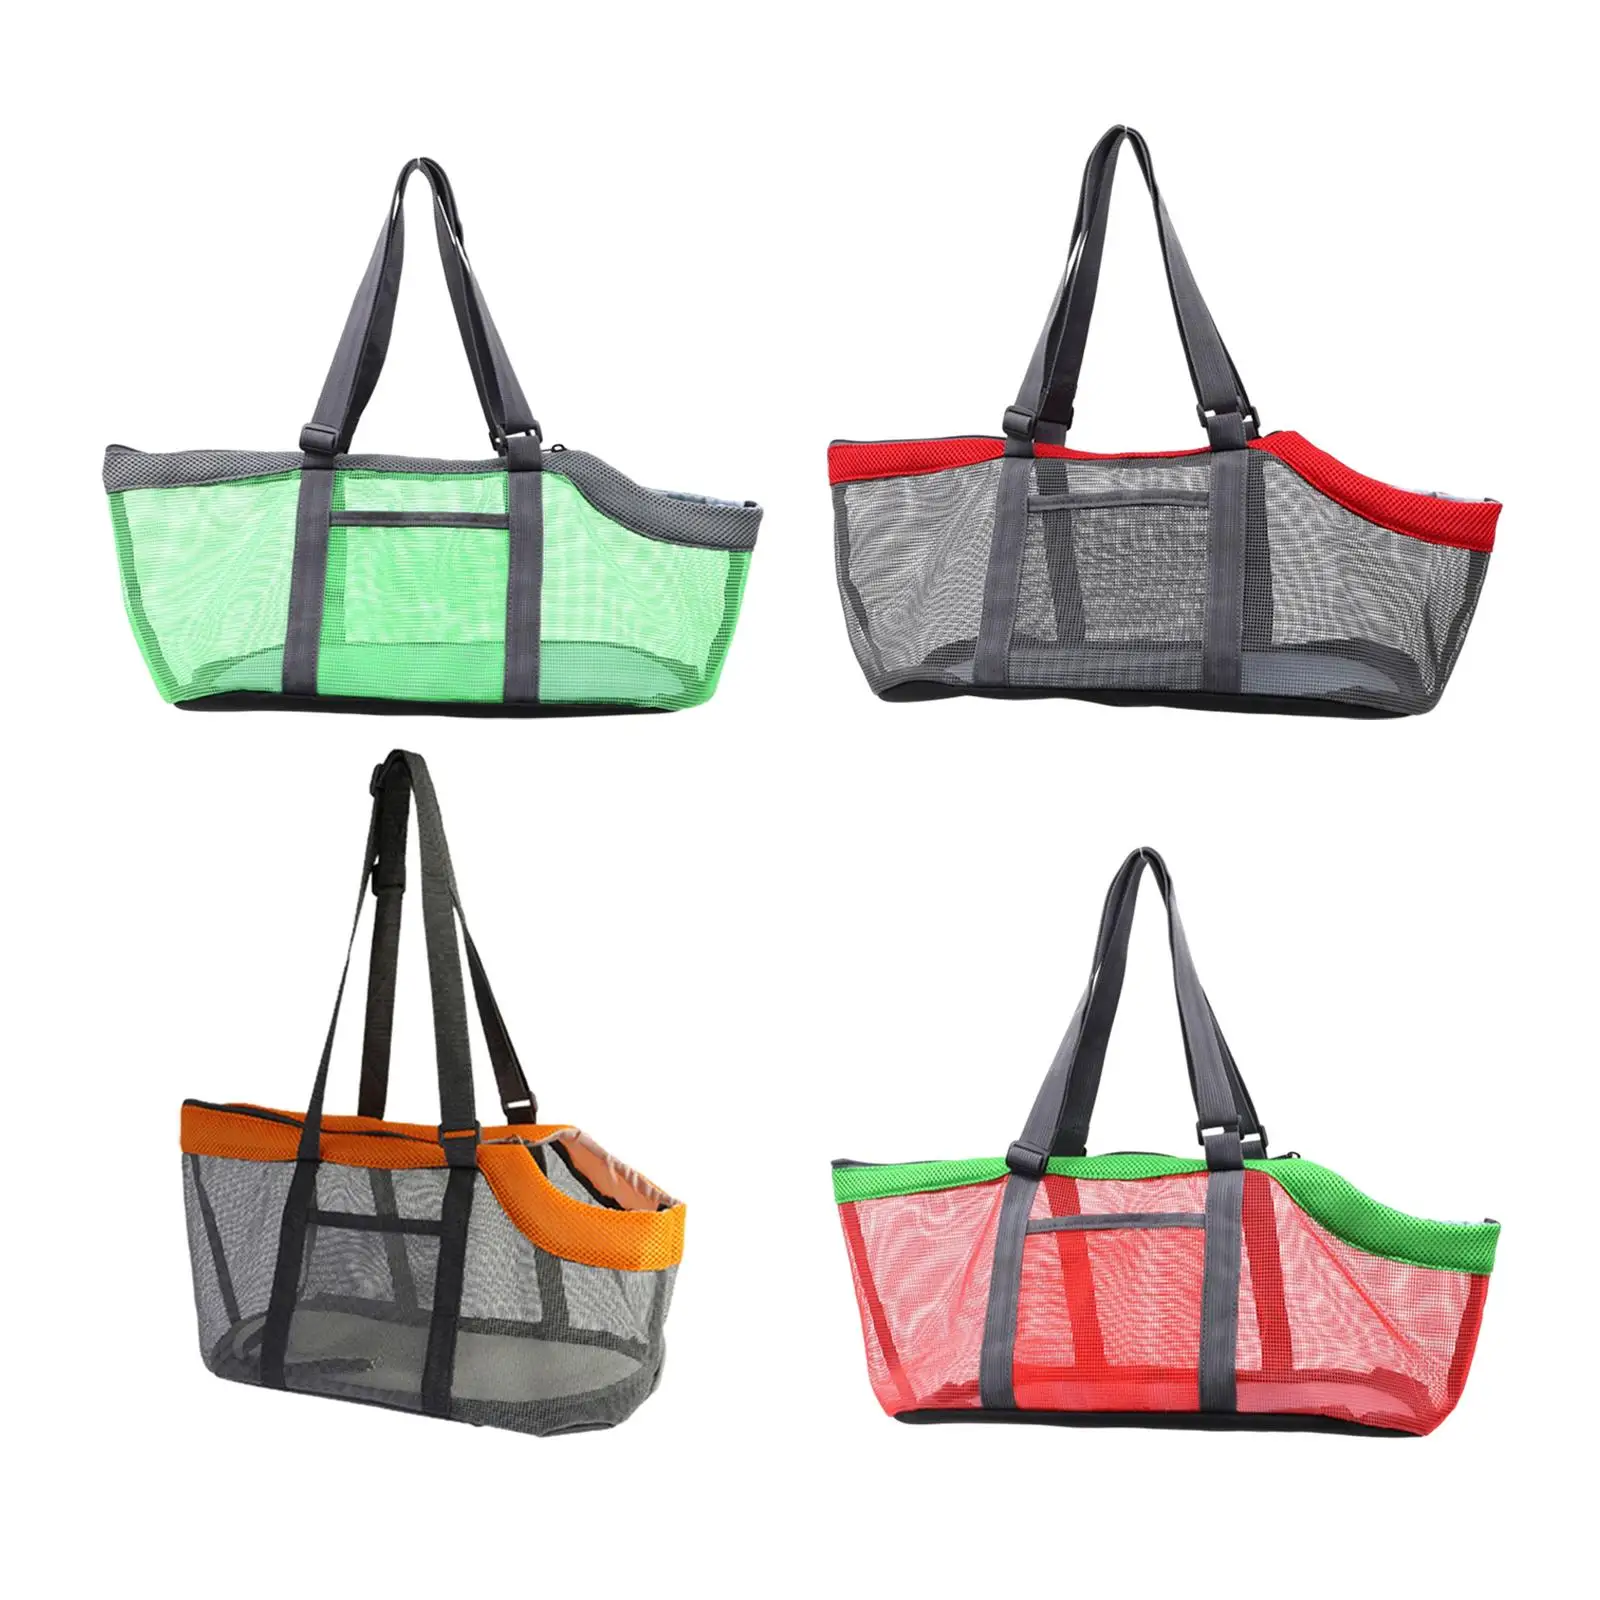 Shoulder Travel Bag with Side Pockets Portable Wear Resistant Pet Carrier Bag for Small Dogs Cat Bunny Walking Hiking Transport